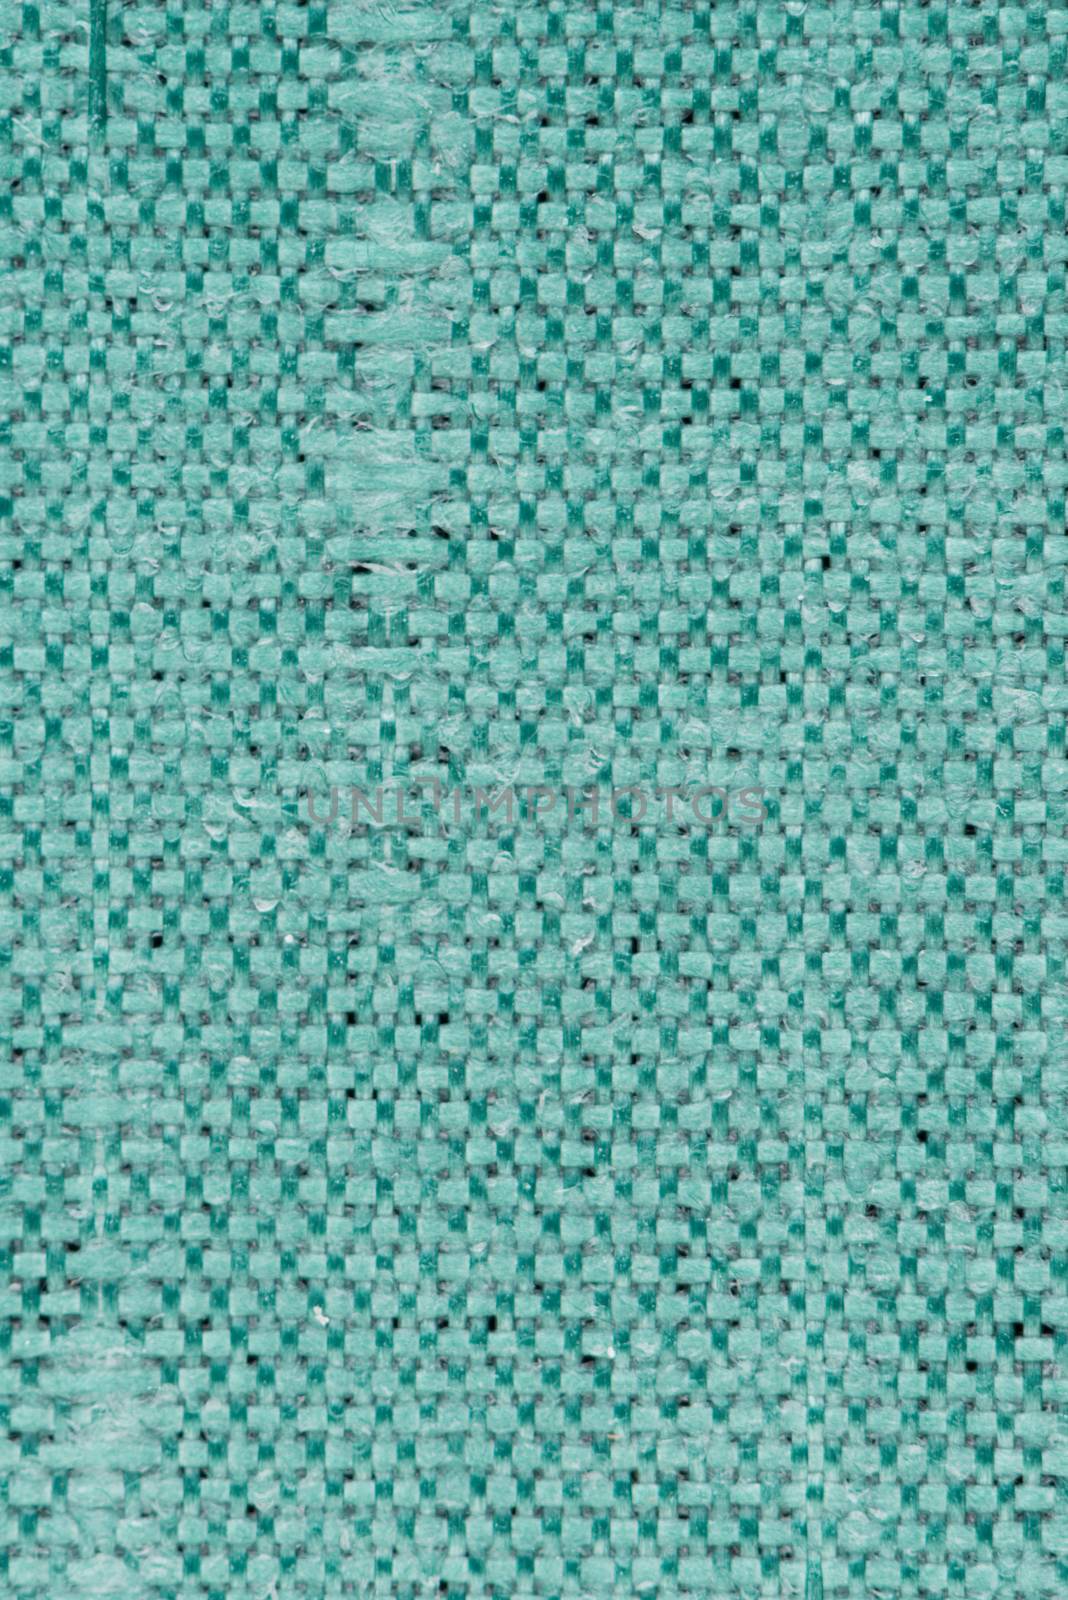 Green vinyl texture by homydesign